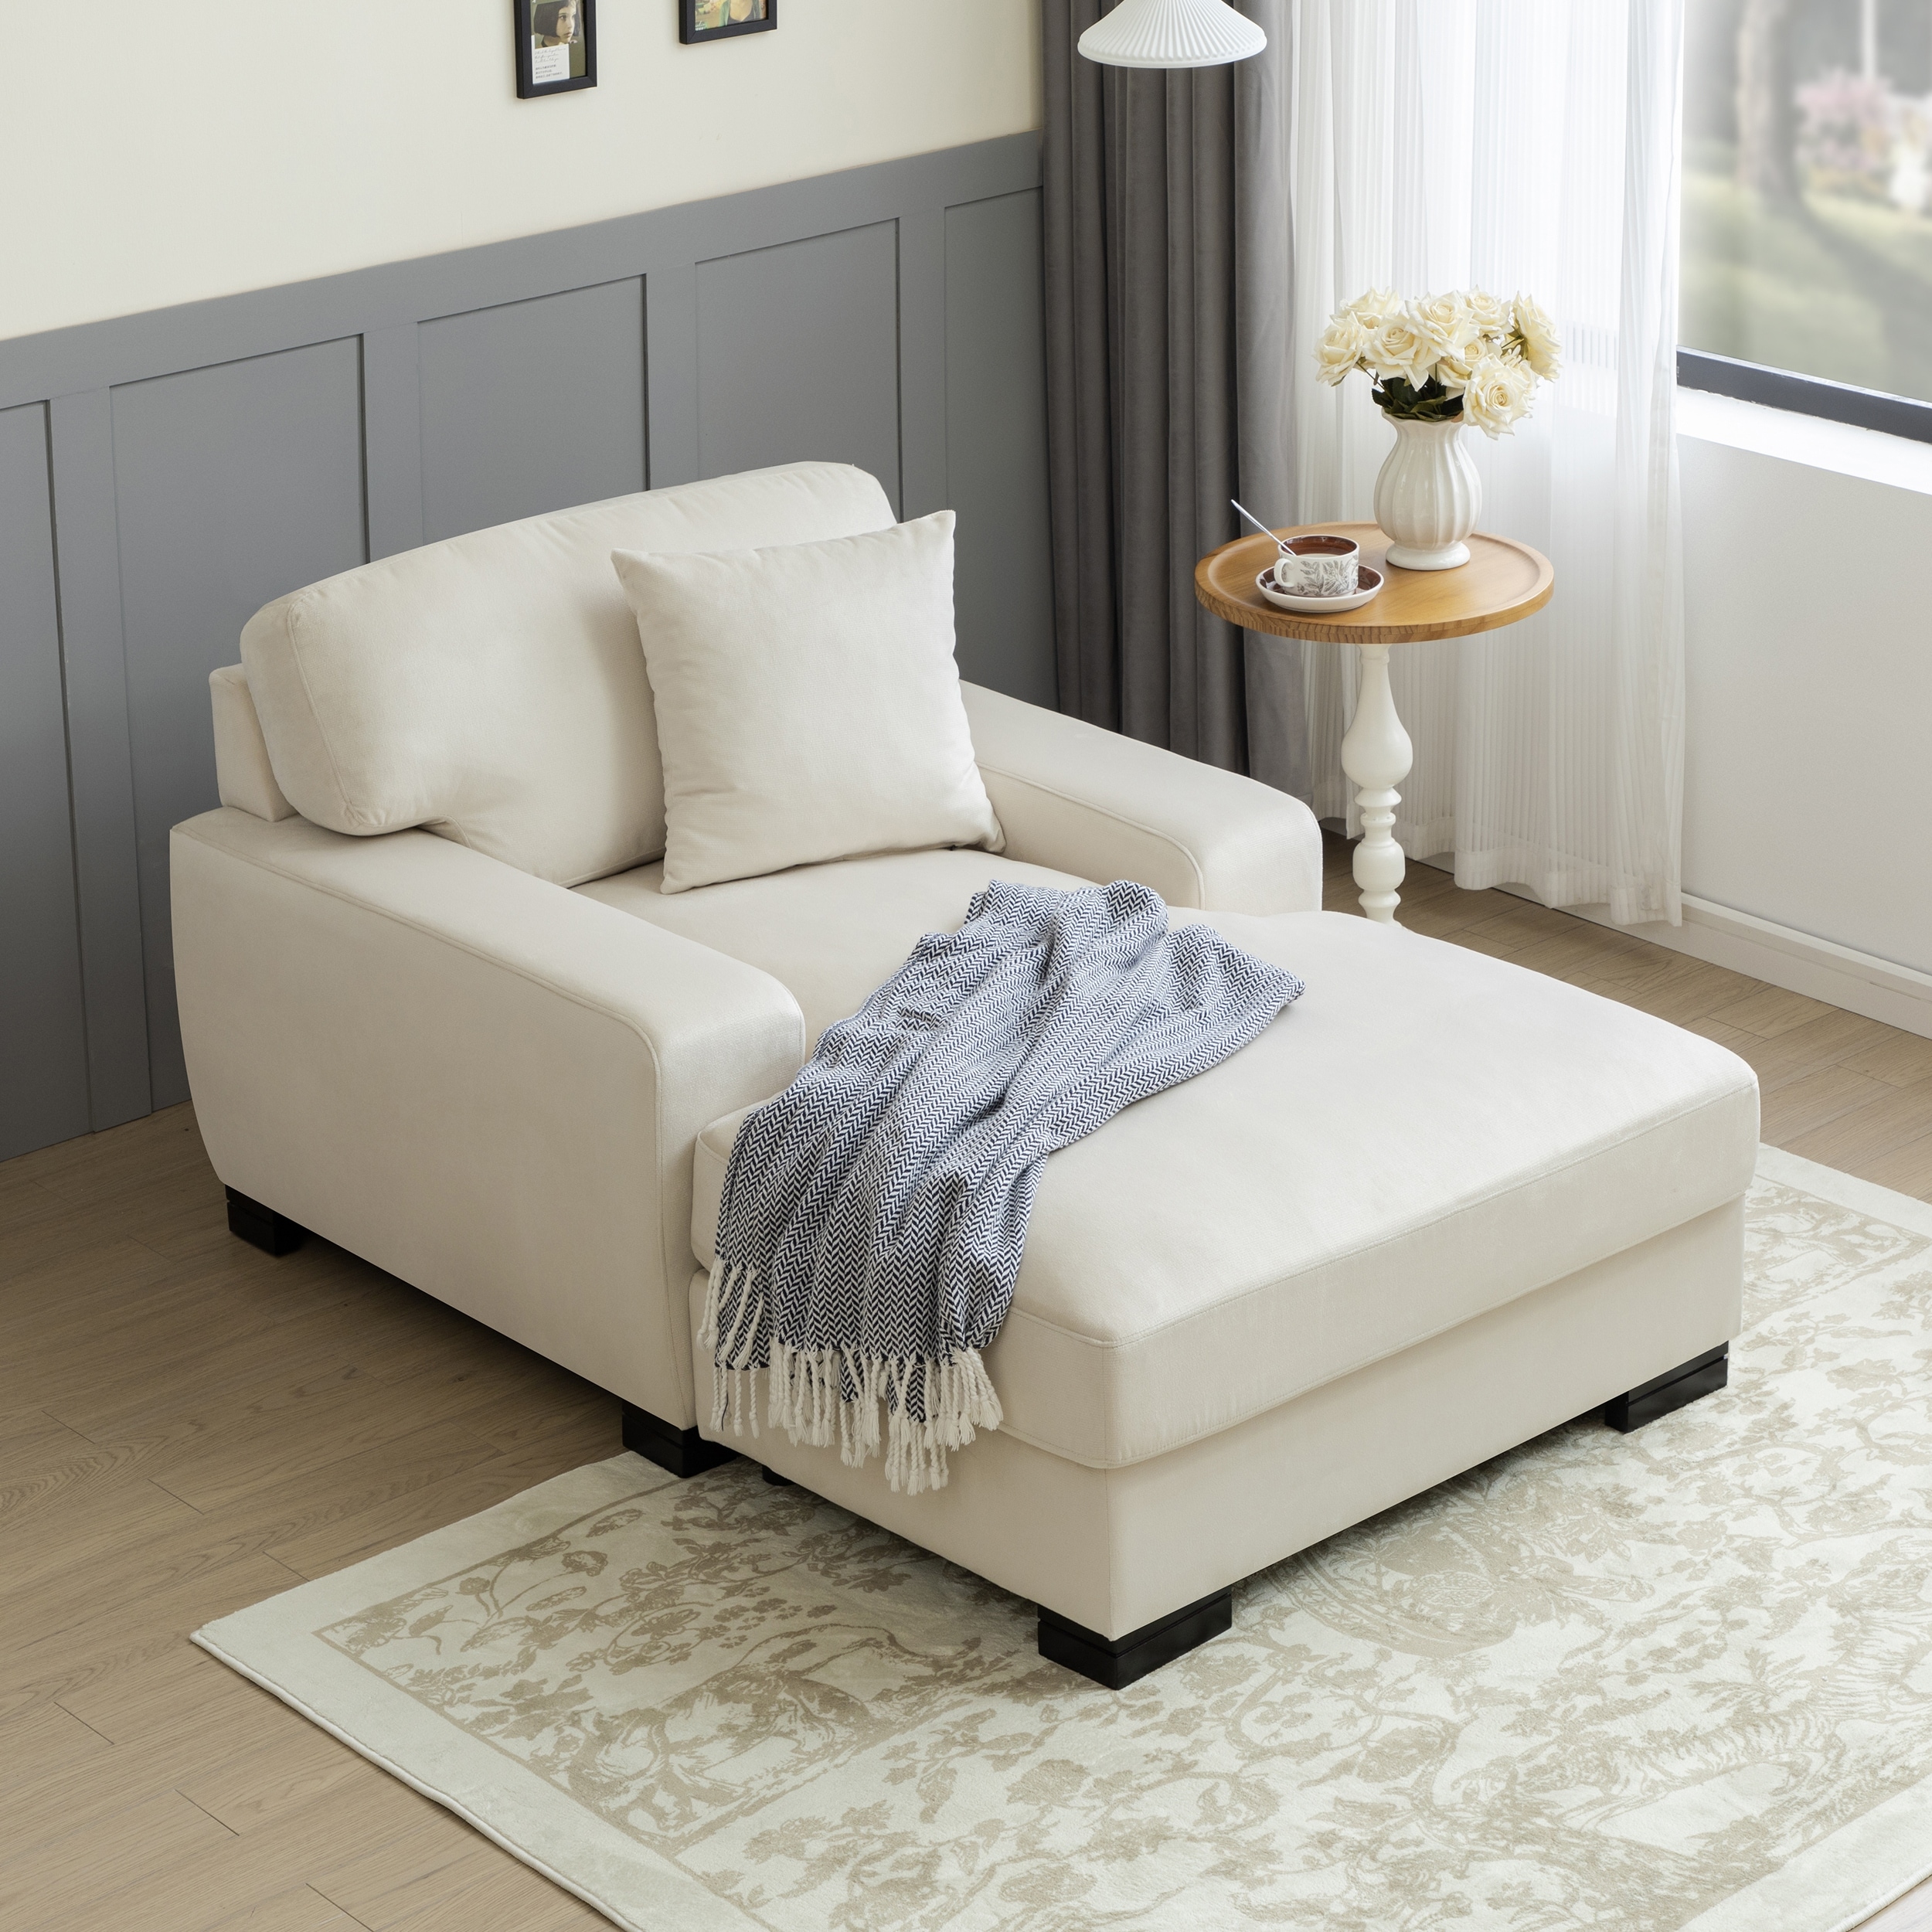 Comfortable Kids Floor Lounger Pillow Bed Yoga Seat Cushion Recliner  Mattress